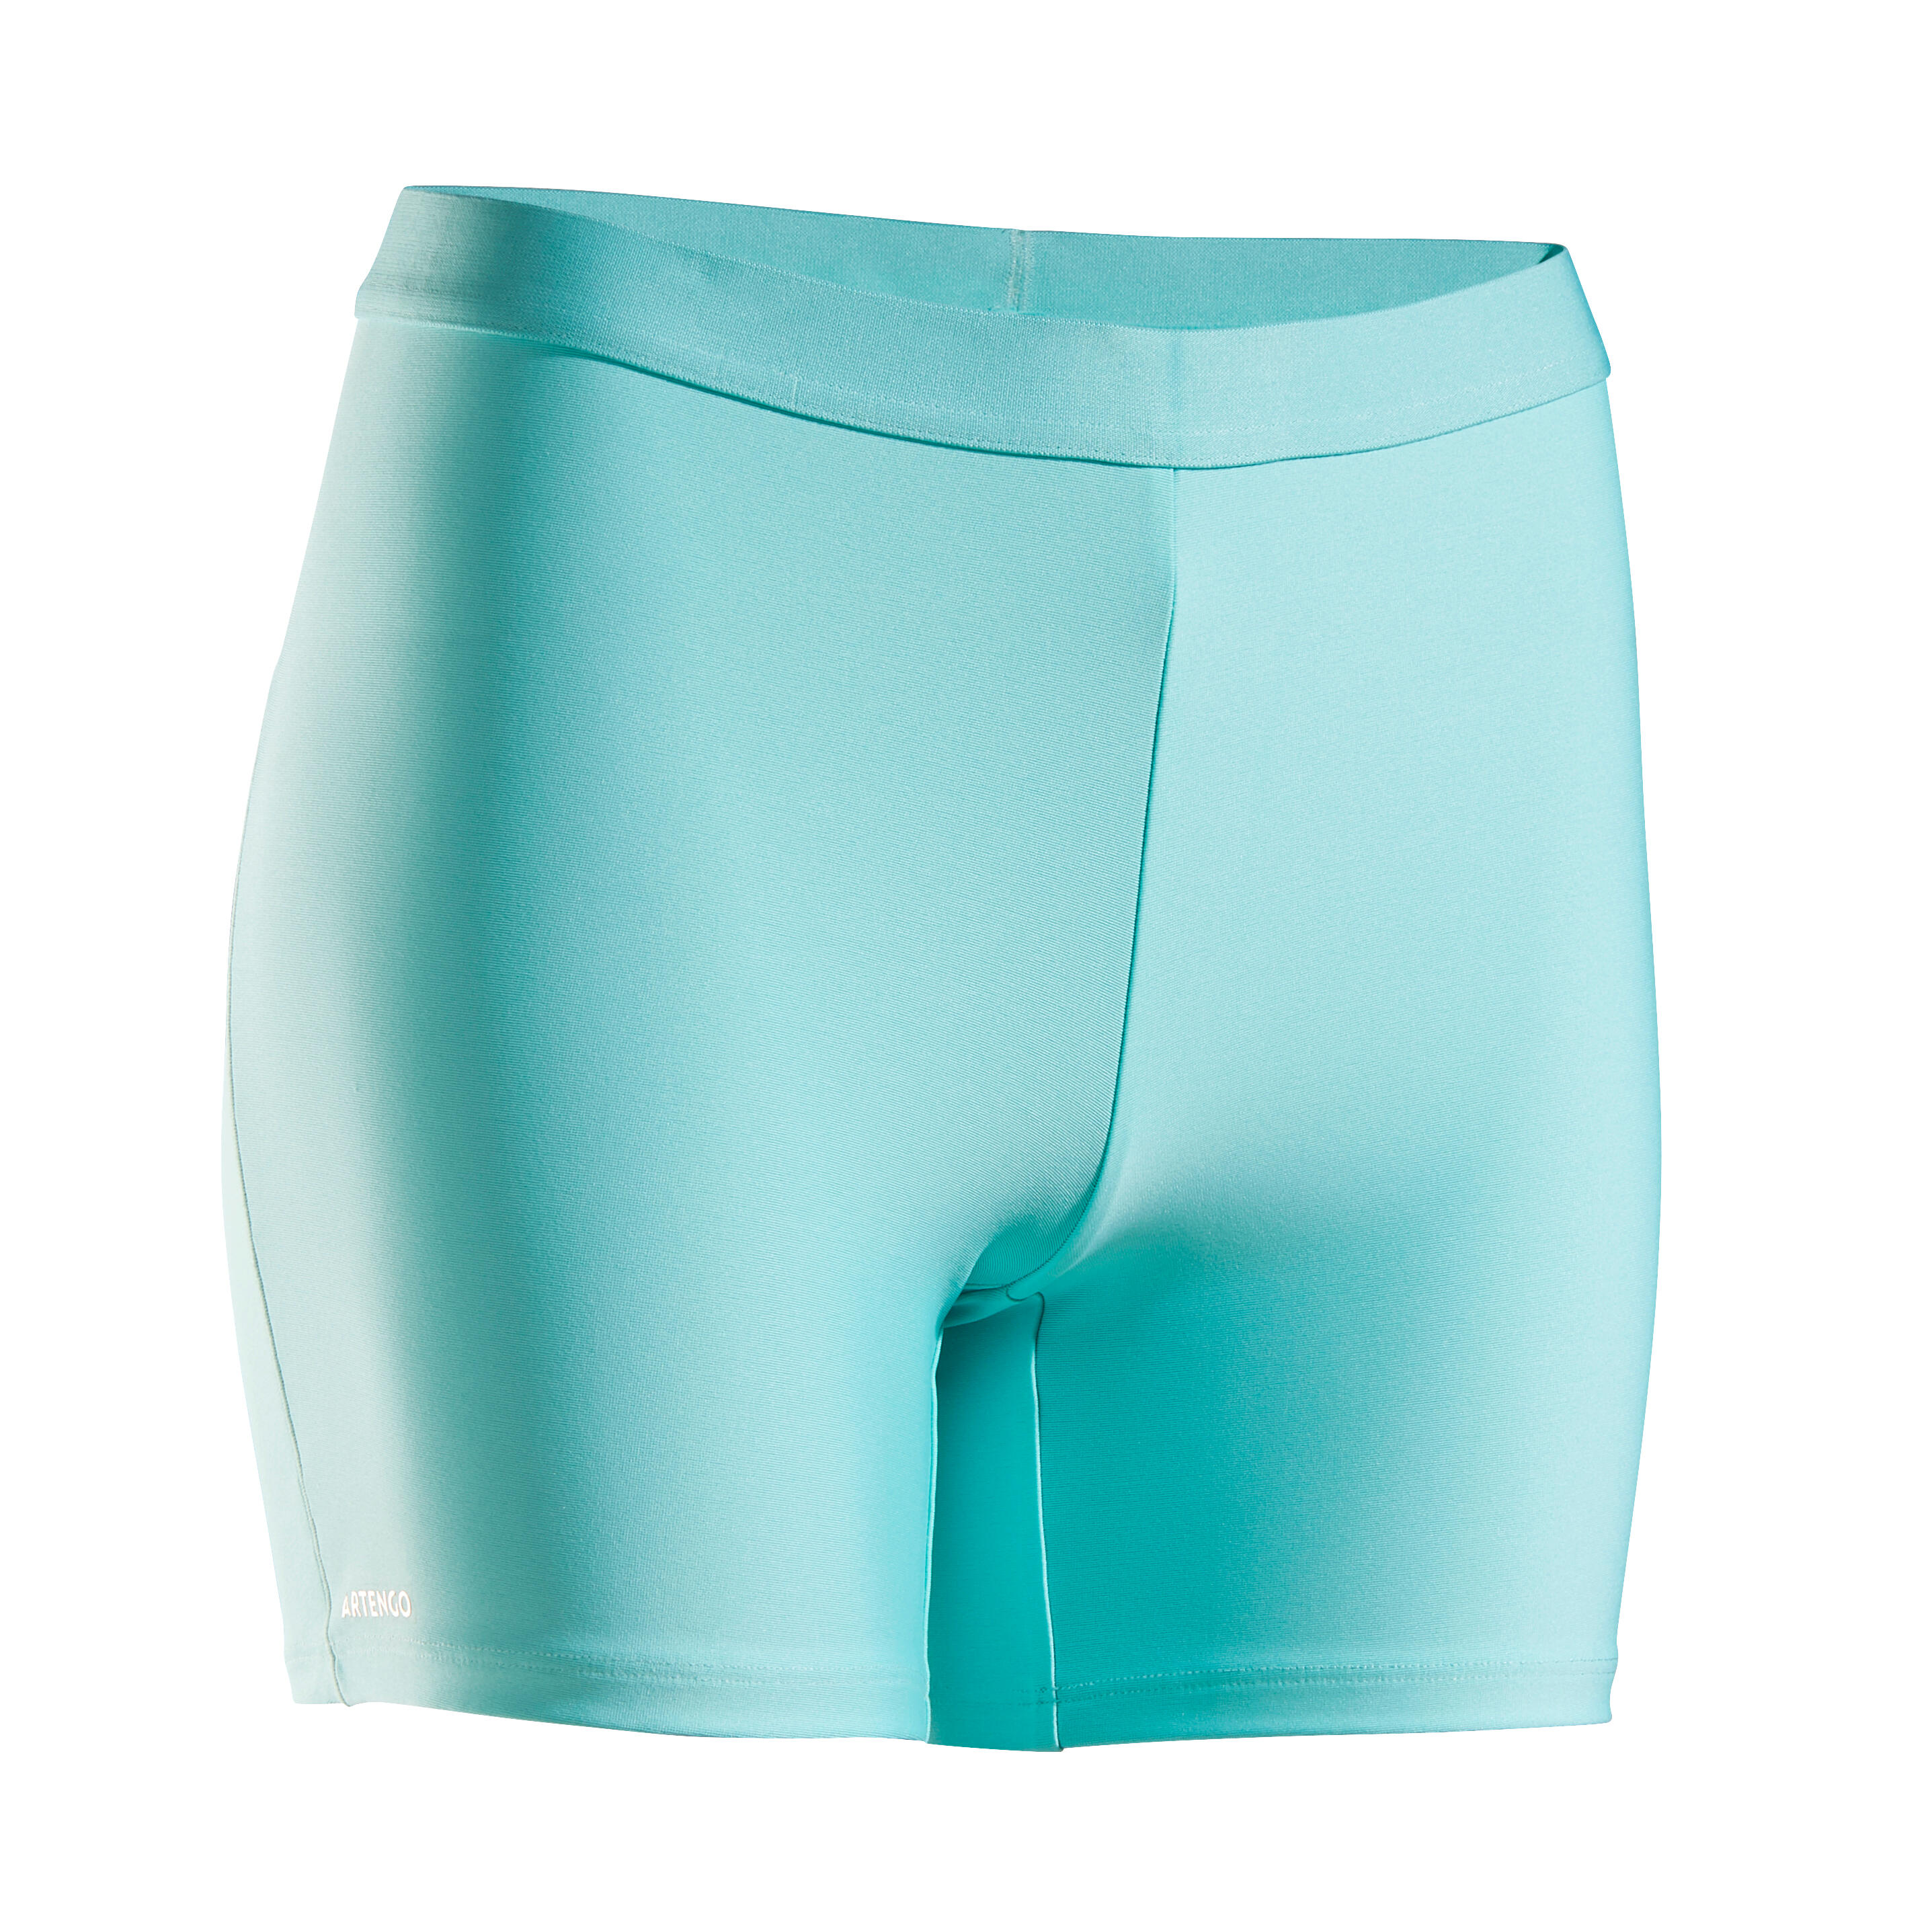 ARTENGO Women's Tennis Quick-Dry Shorts Dry 900 - Turquoise